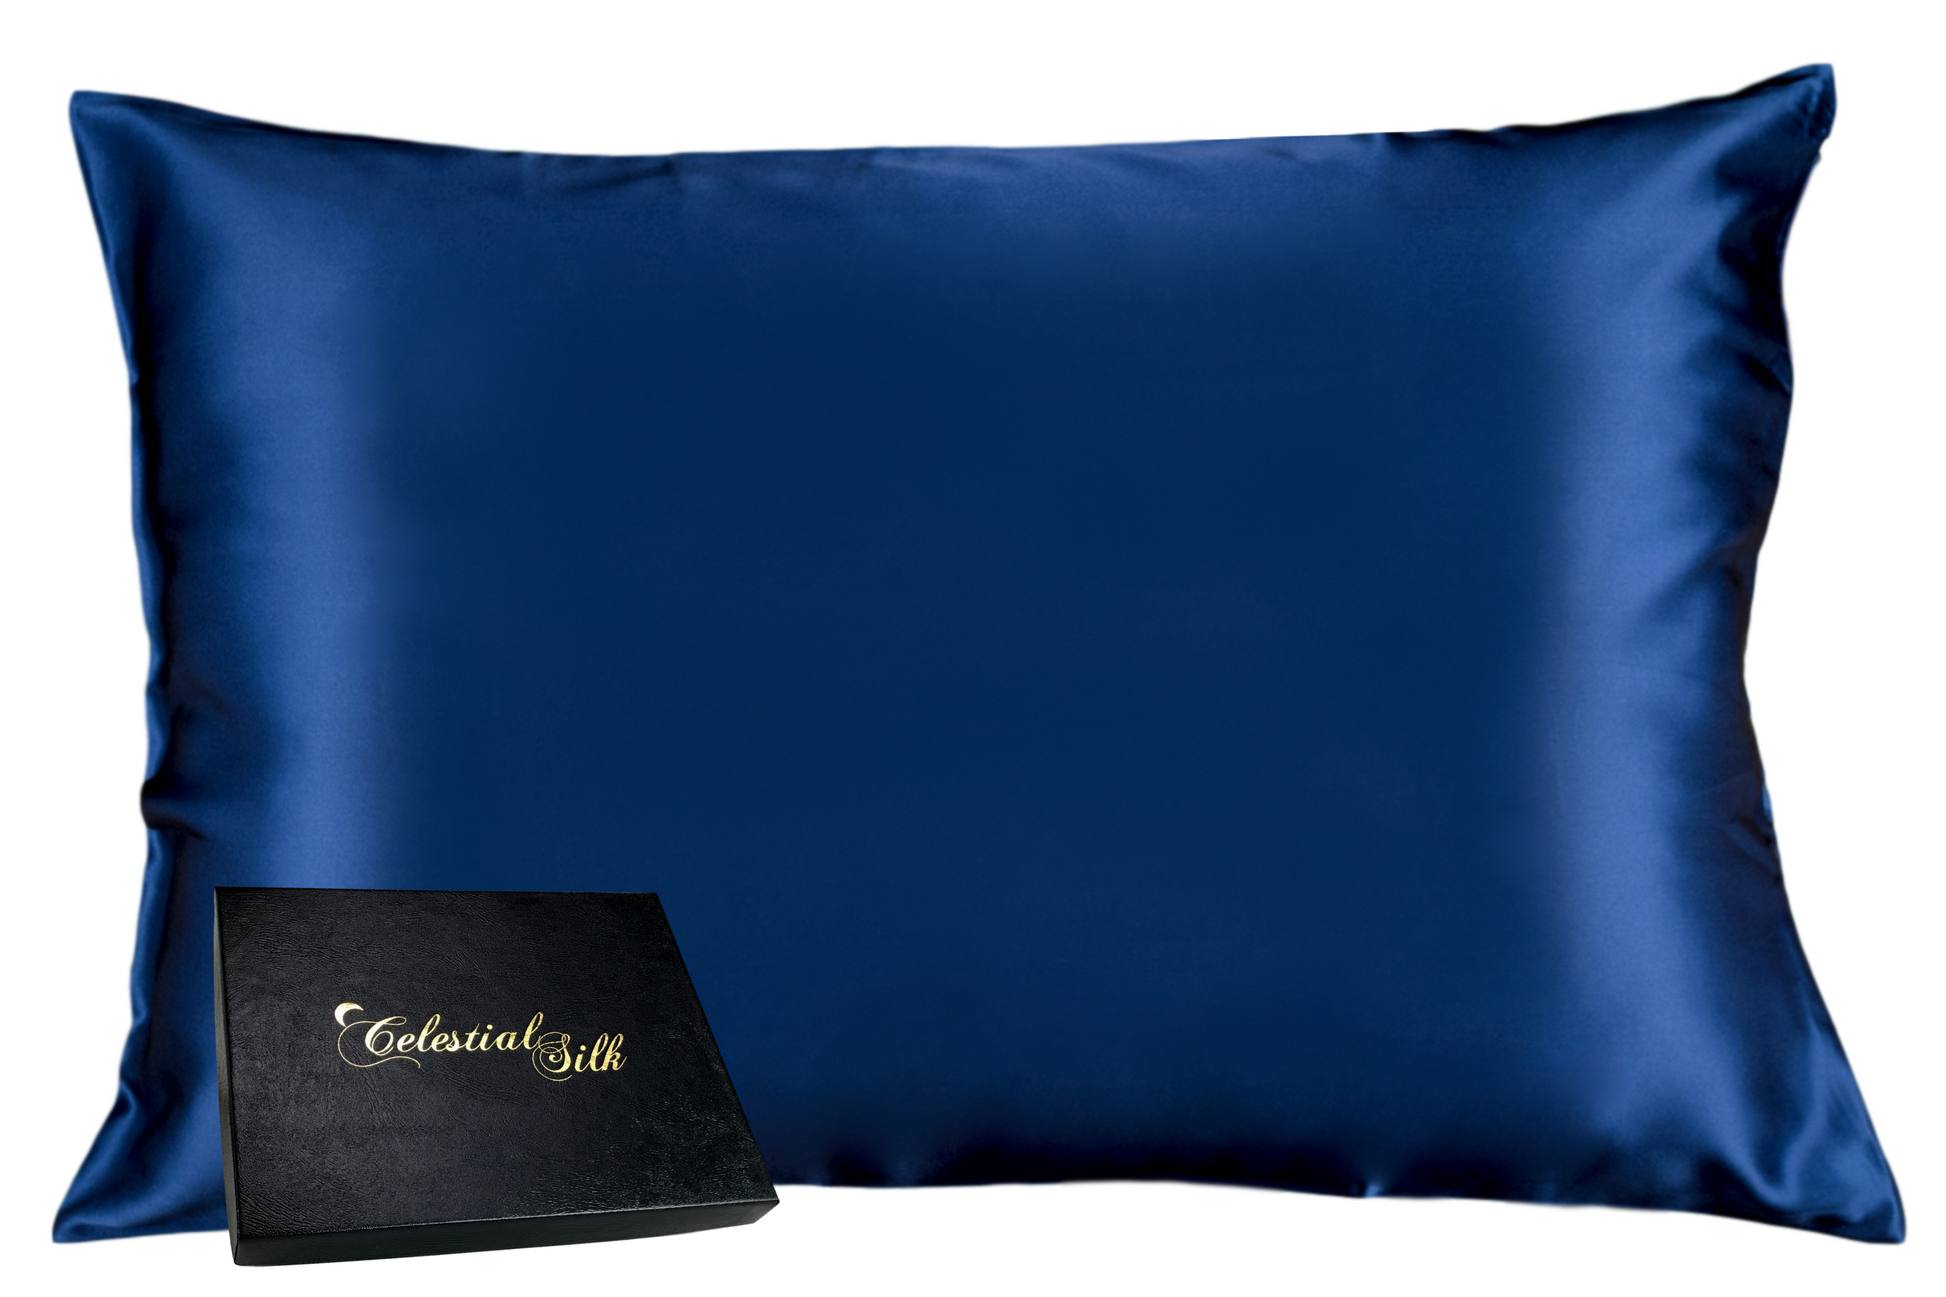 Celestial Silk navy blue mulberry silk pillowcase